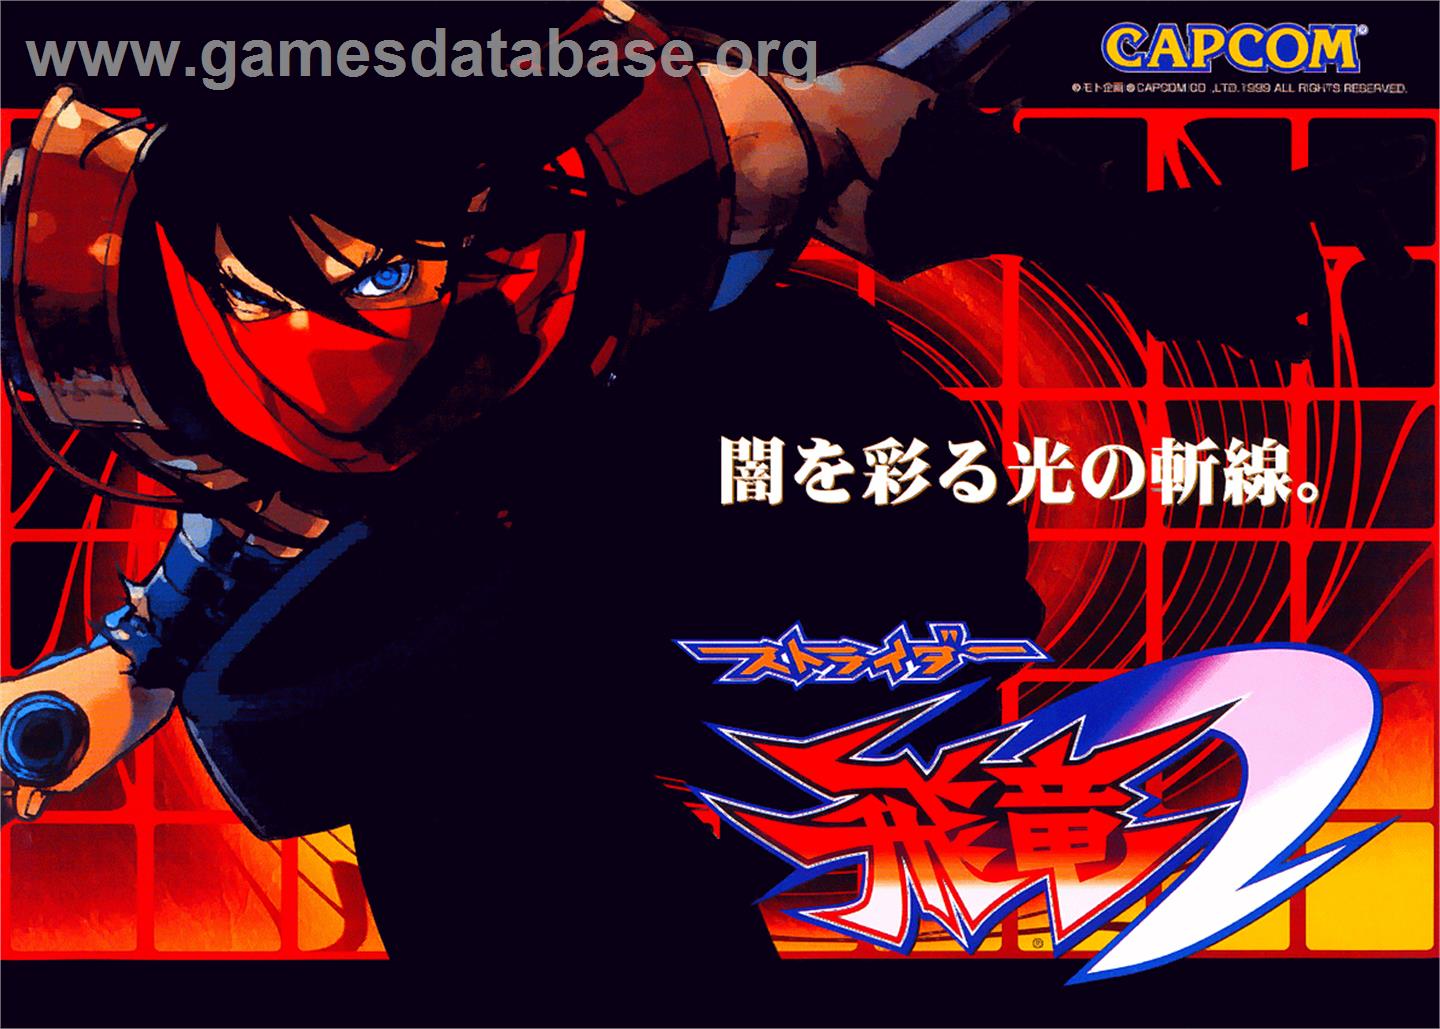 Strider 2 - Sega Genesis - Artwork - Advert